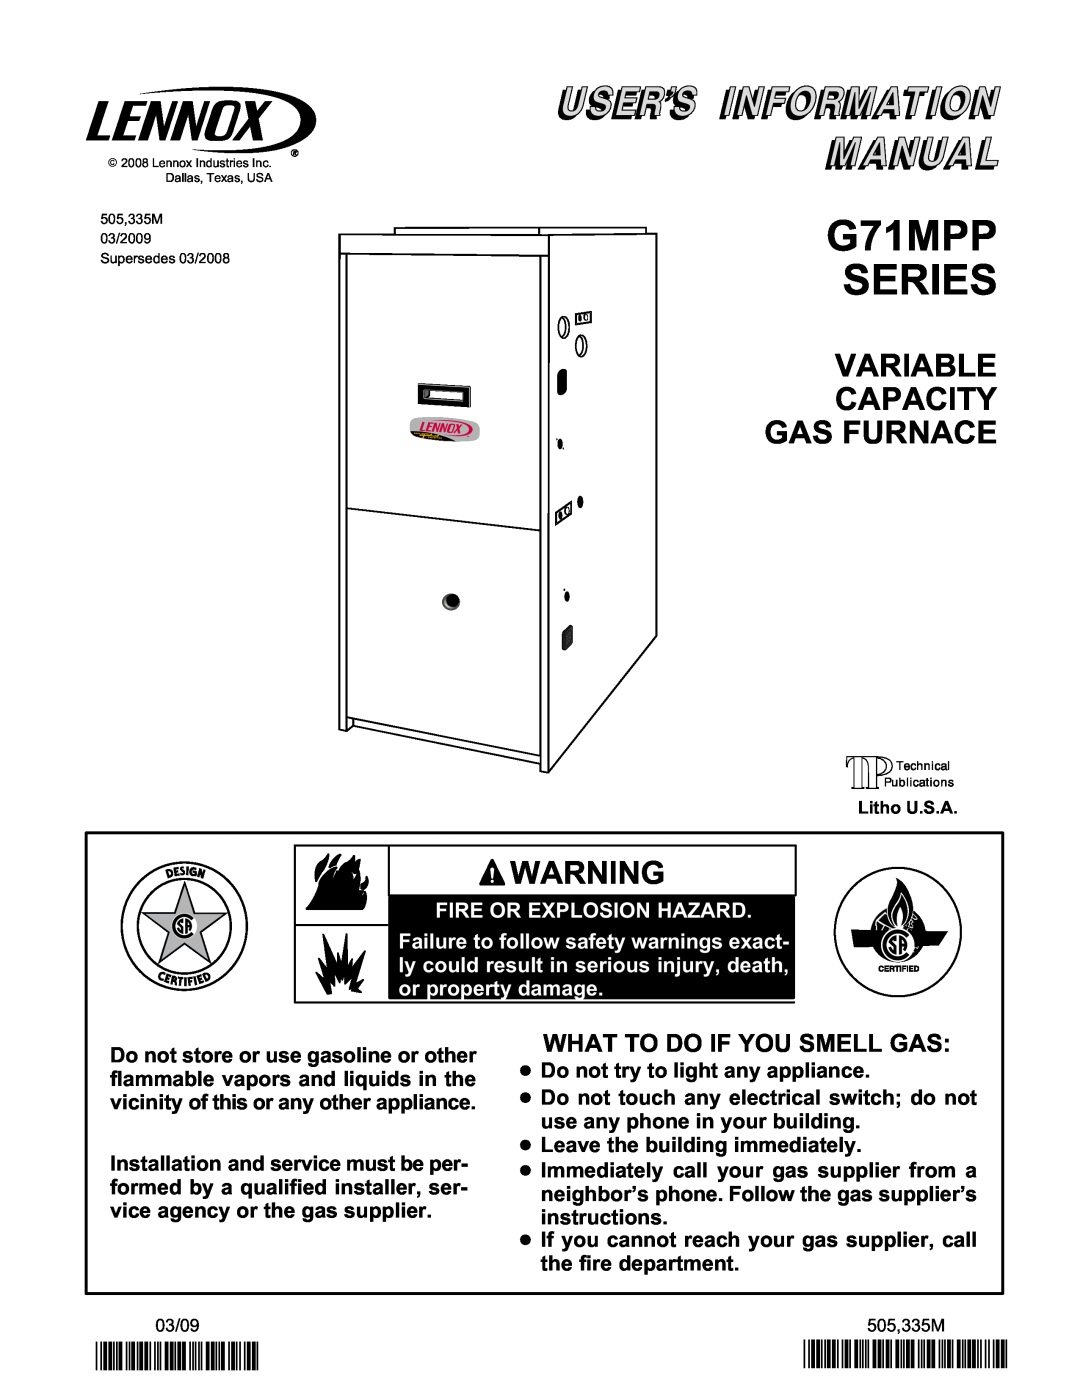 Lennox International Inc manual Variable Capacity Gas Furnace, G71MPP SERIES, 2P0309, P505335M 